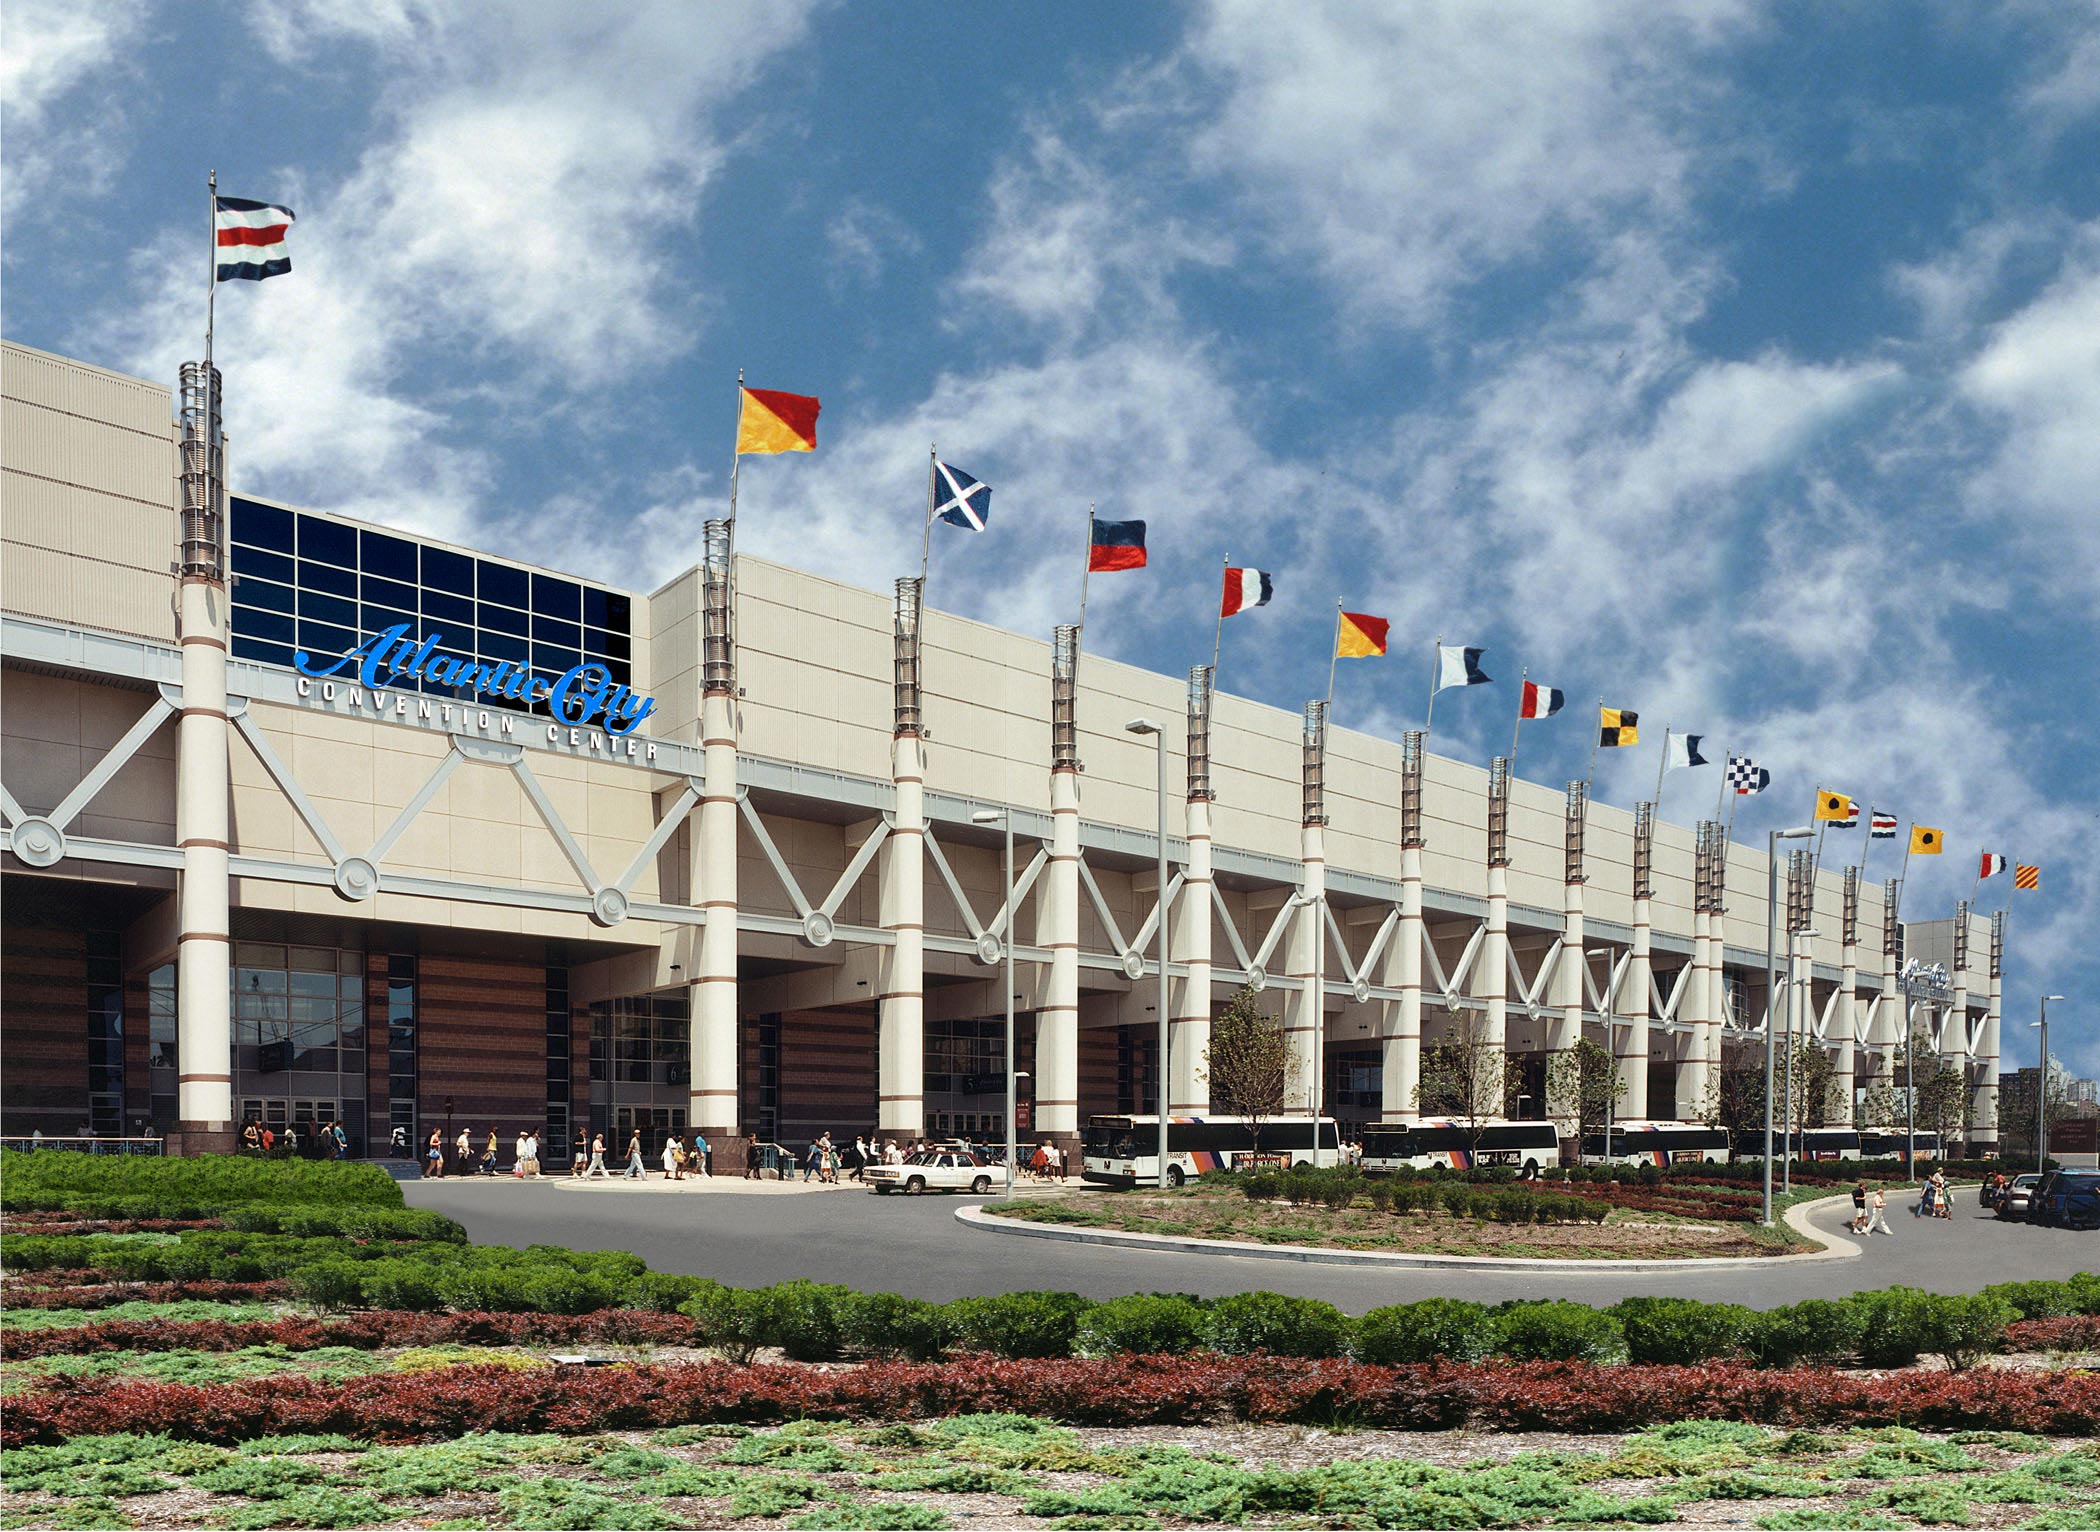 Sheraton Atlantic City Convention Center - YouTube